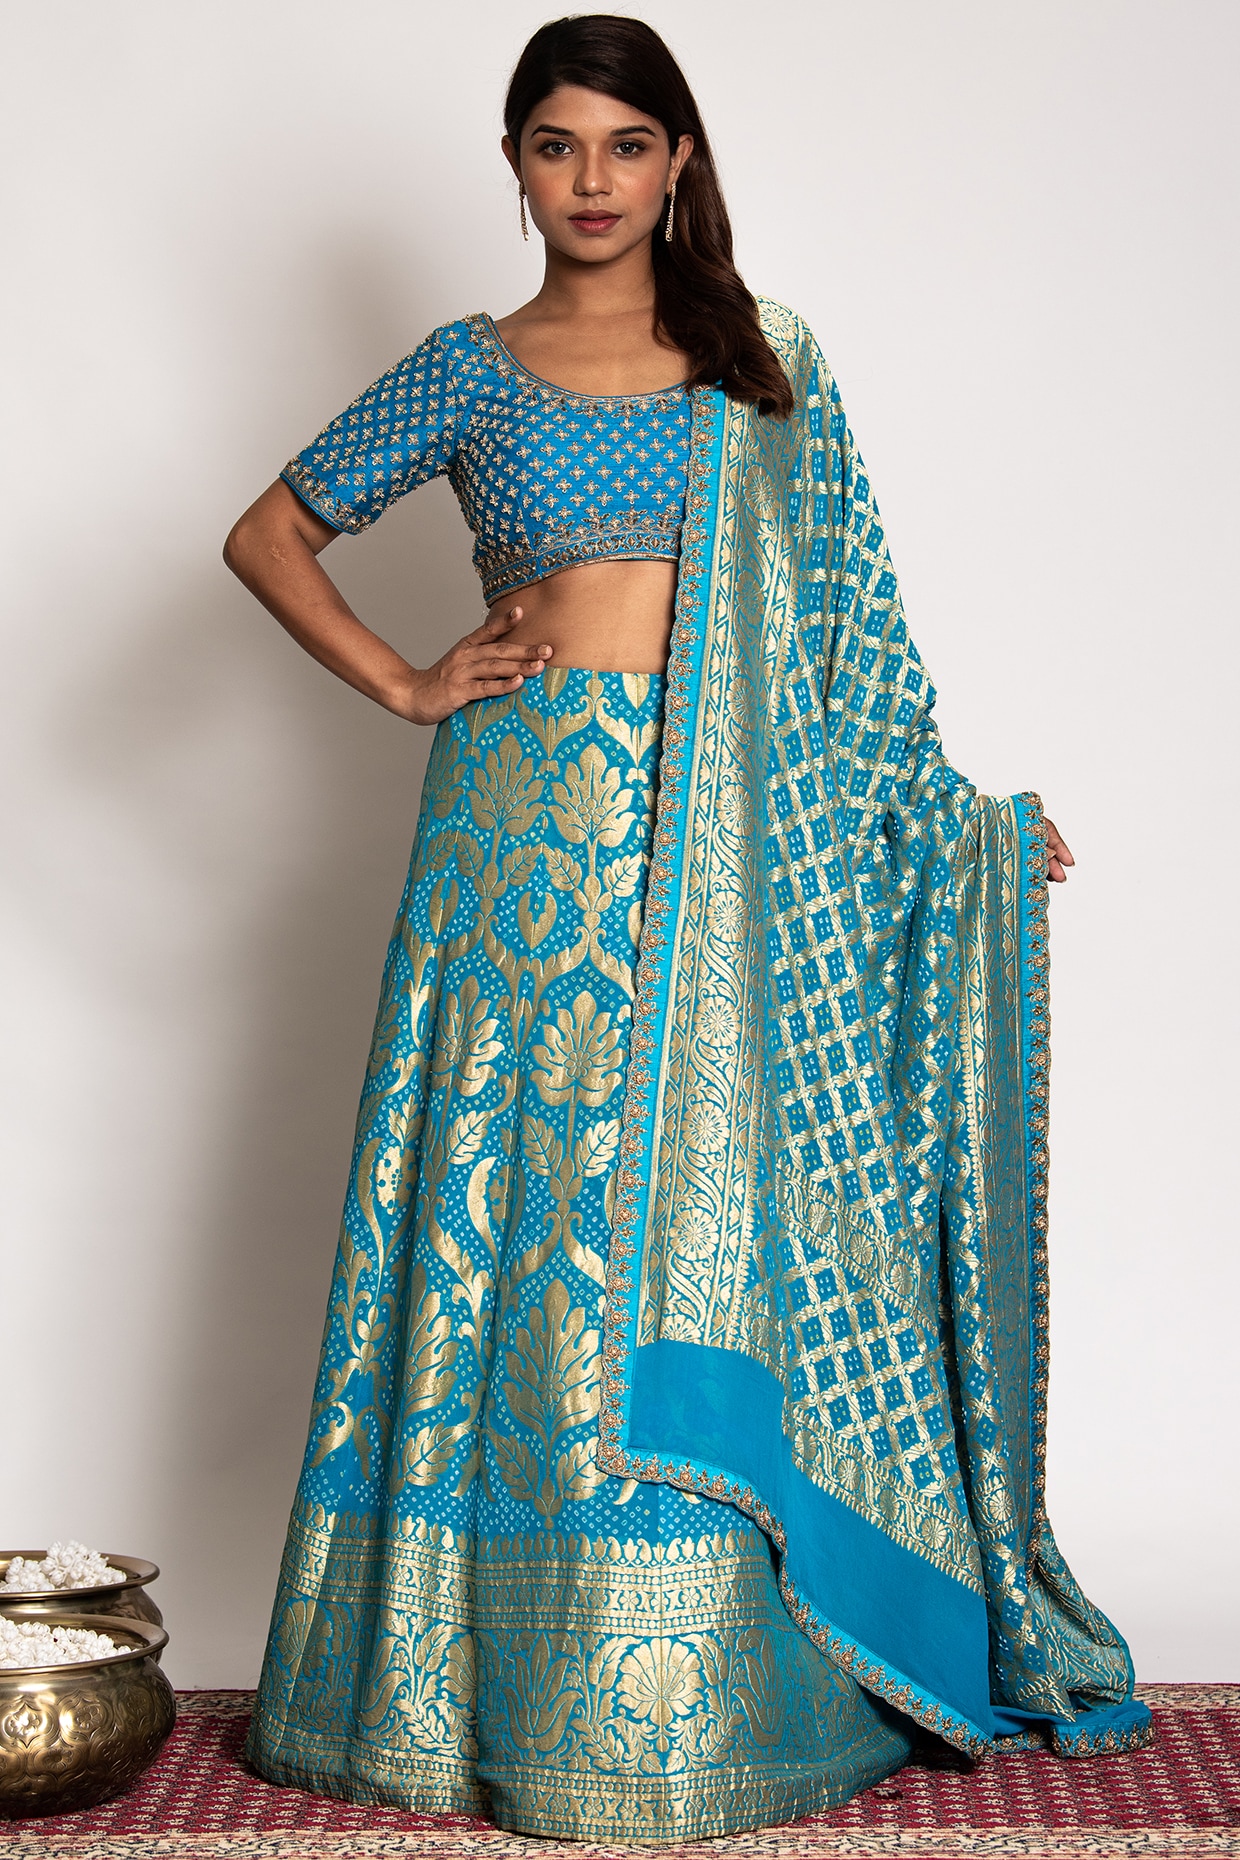 Gorgeous Banarasi Lehengas We Are Totally Crushing On! | Indian gowns  dresses, Lehenga designs, Indian fashion dresses